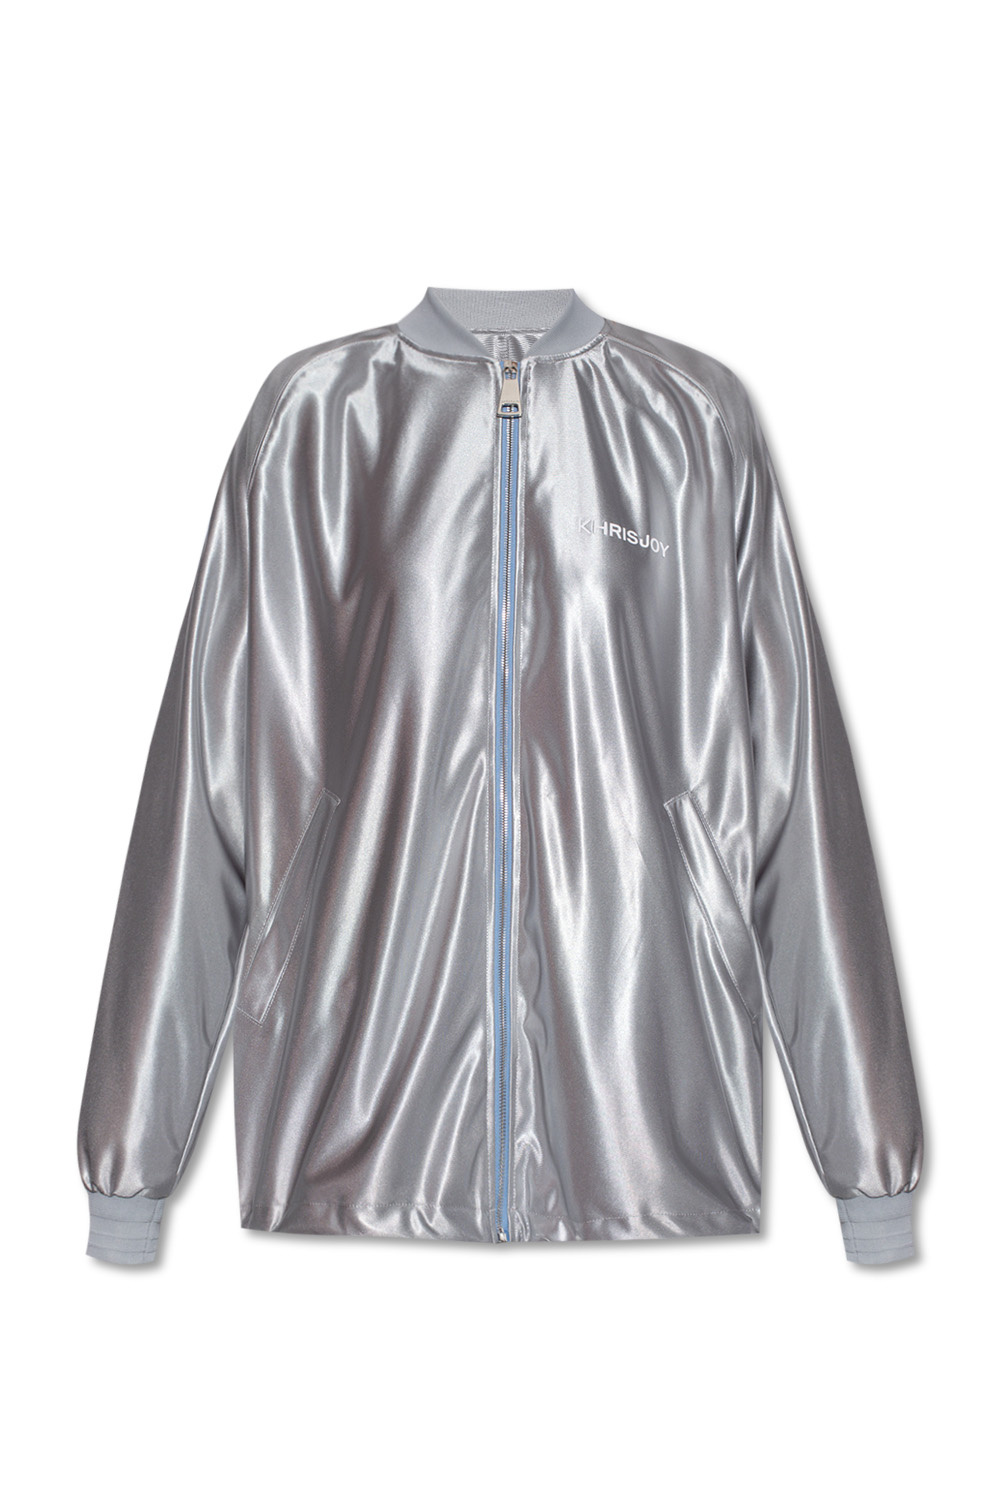 Khrisjoy Emilio Pucci belted blazer jacket